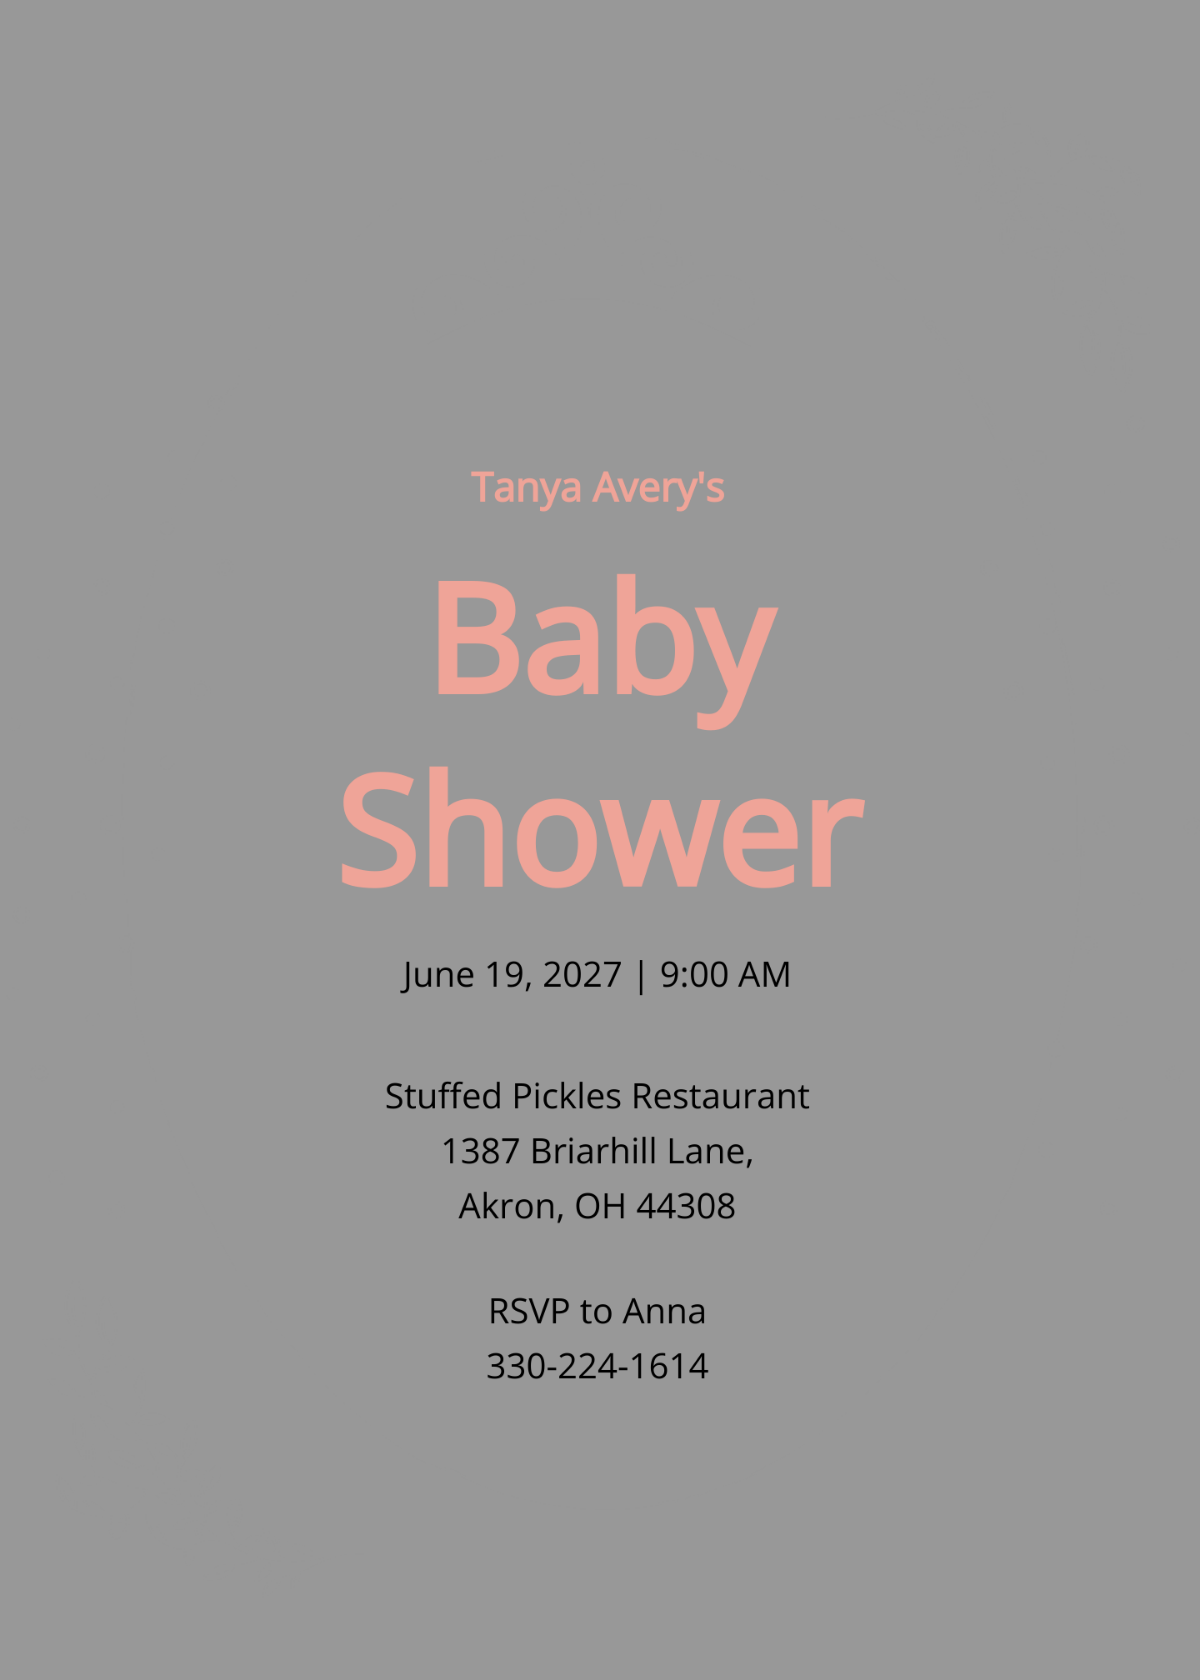 Princess Baby Shower Invitation Template